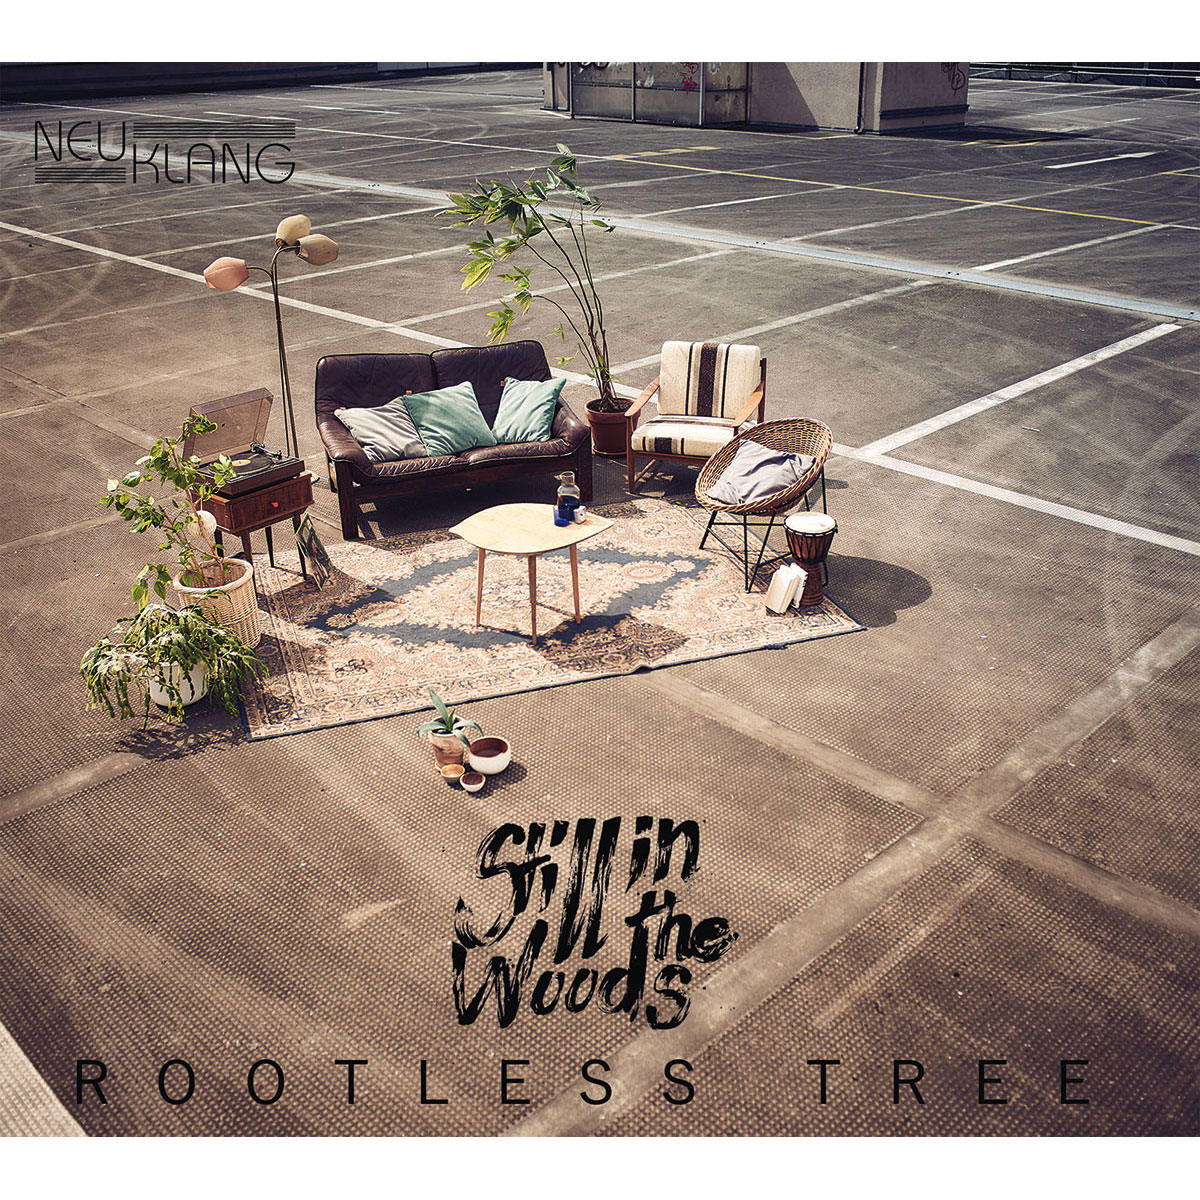 Rootless Tree